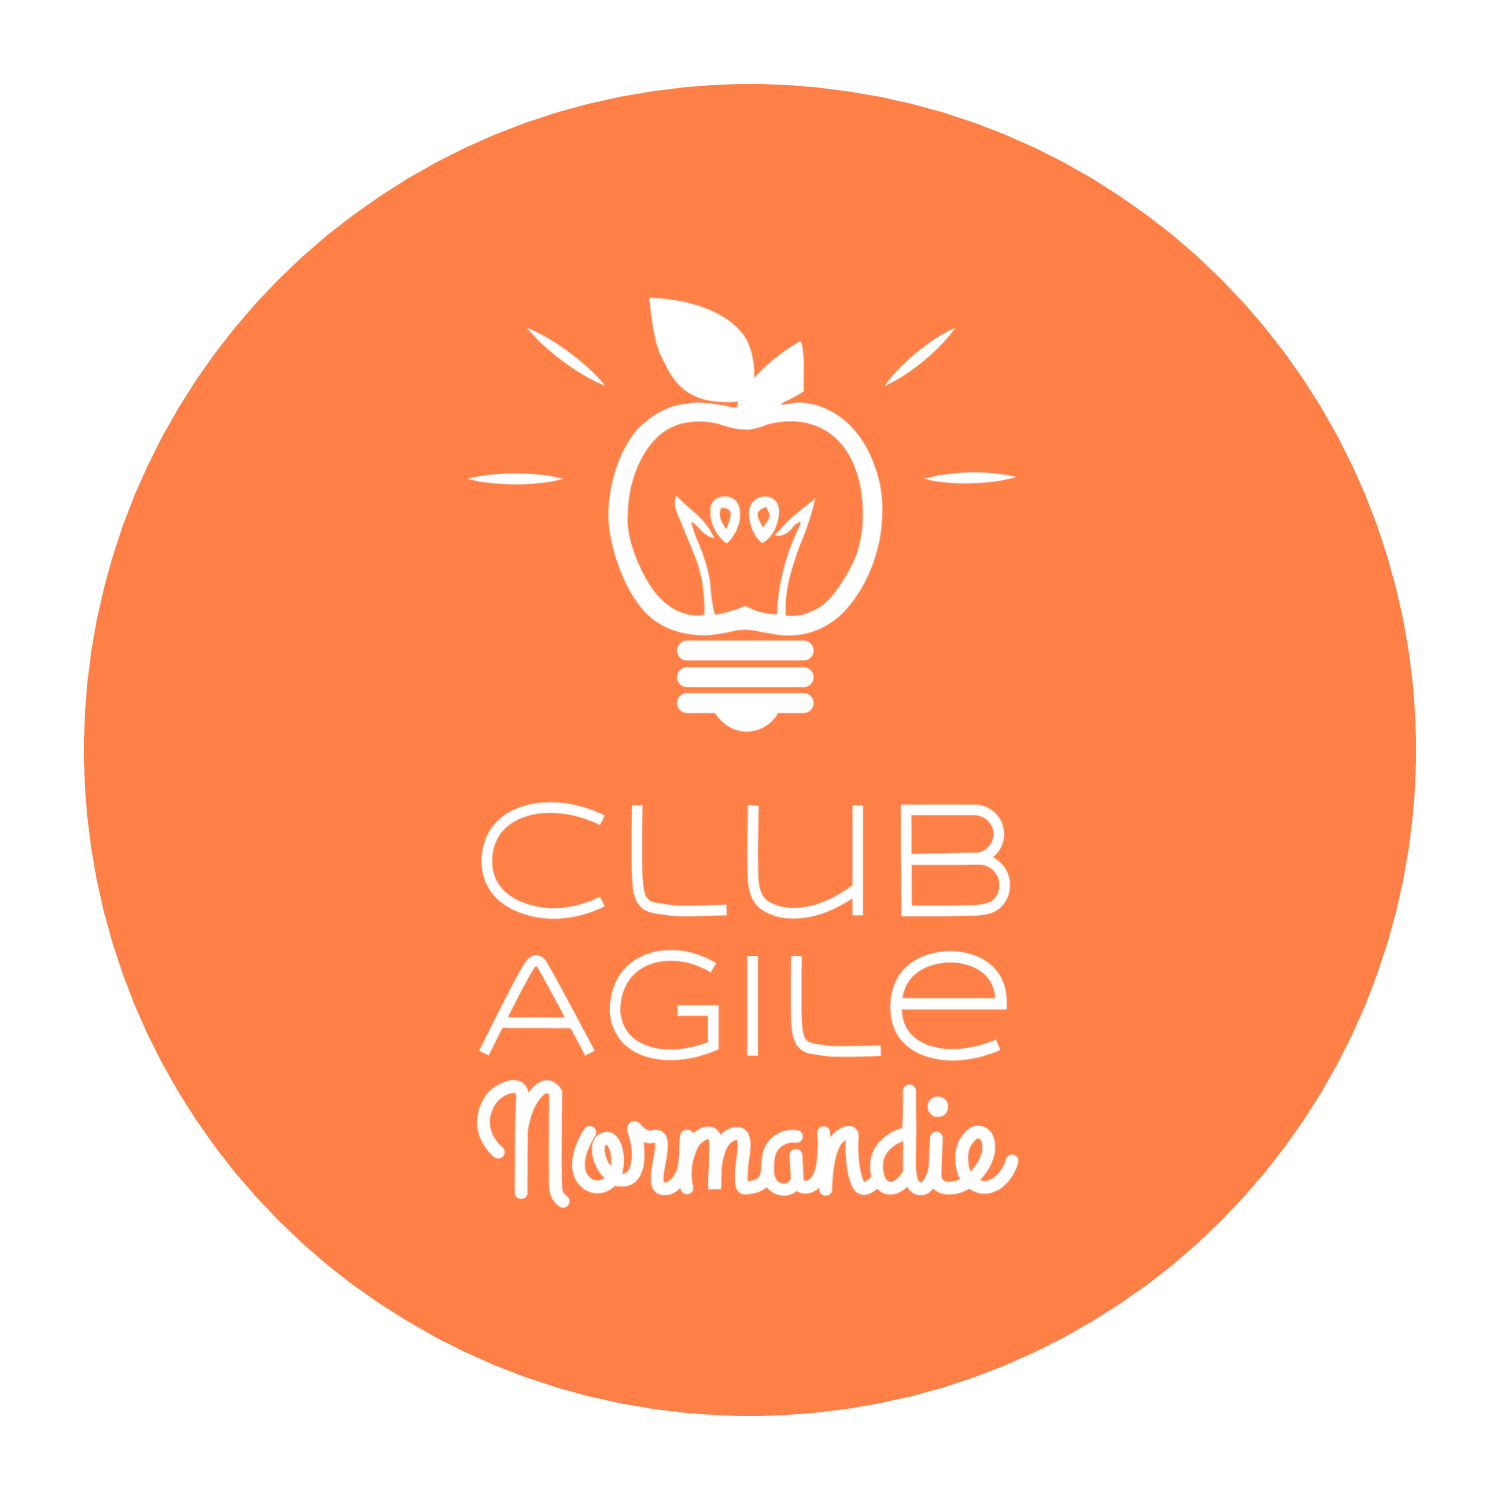 Club Agile Normandie